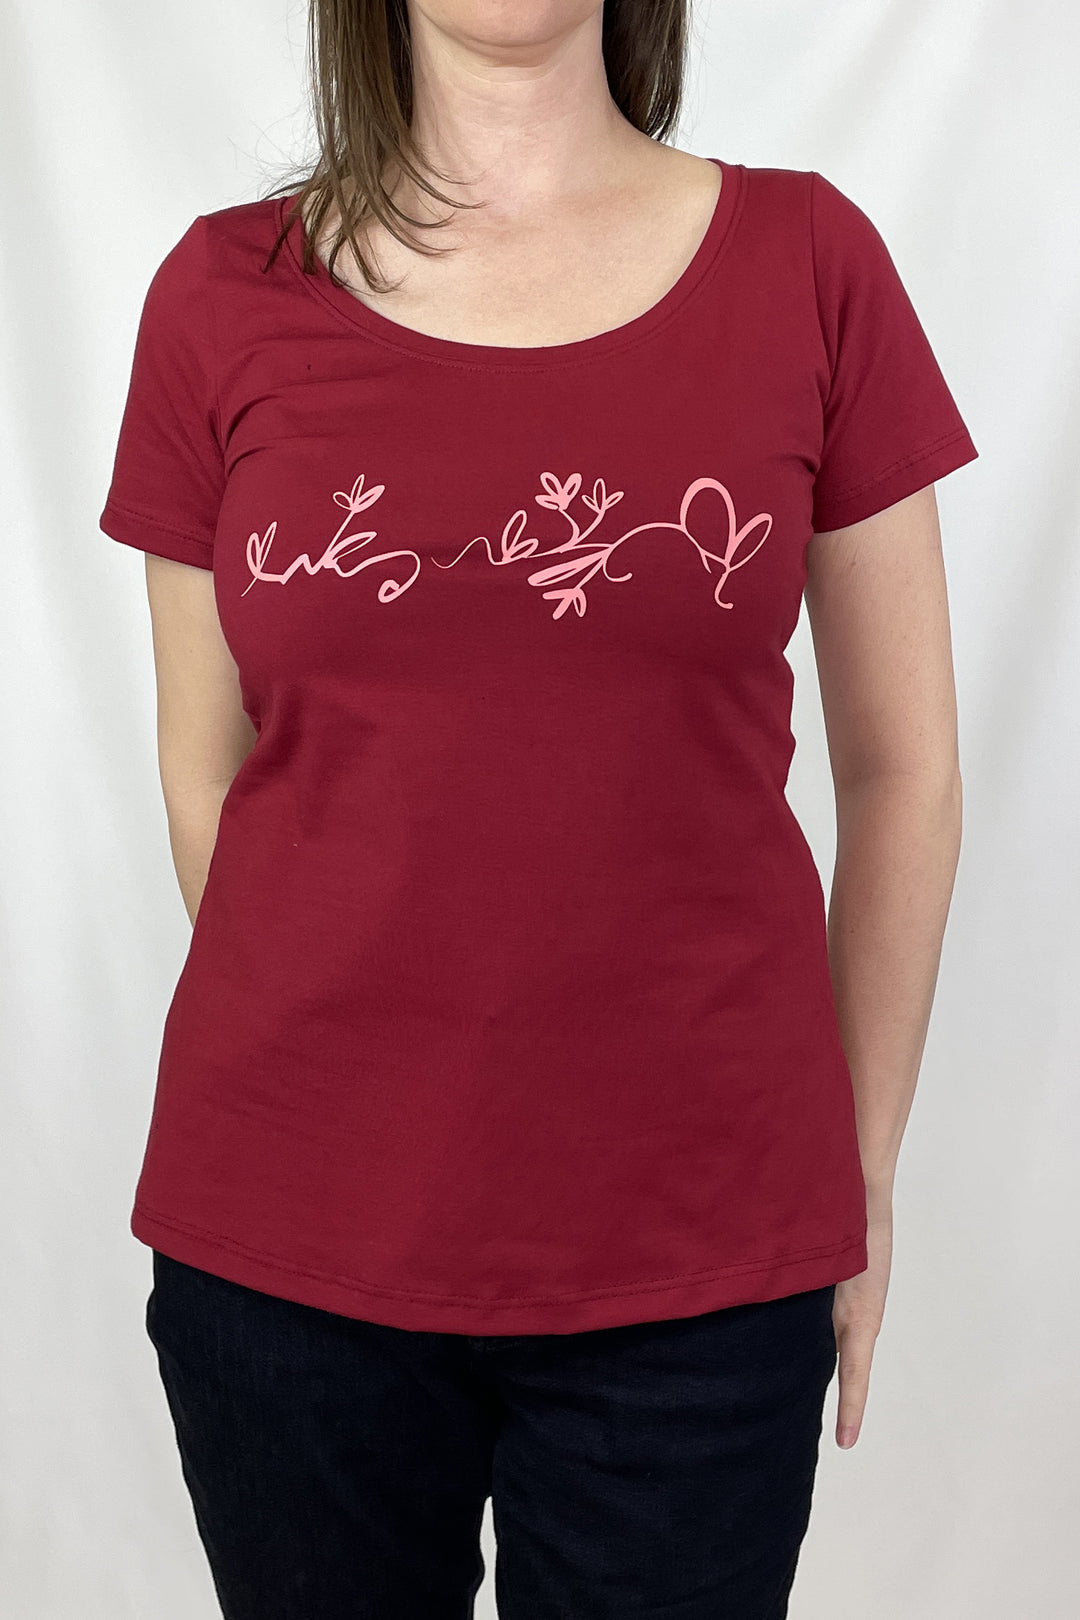 T-shirt - Heart and Flower - Cherry